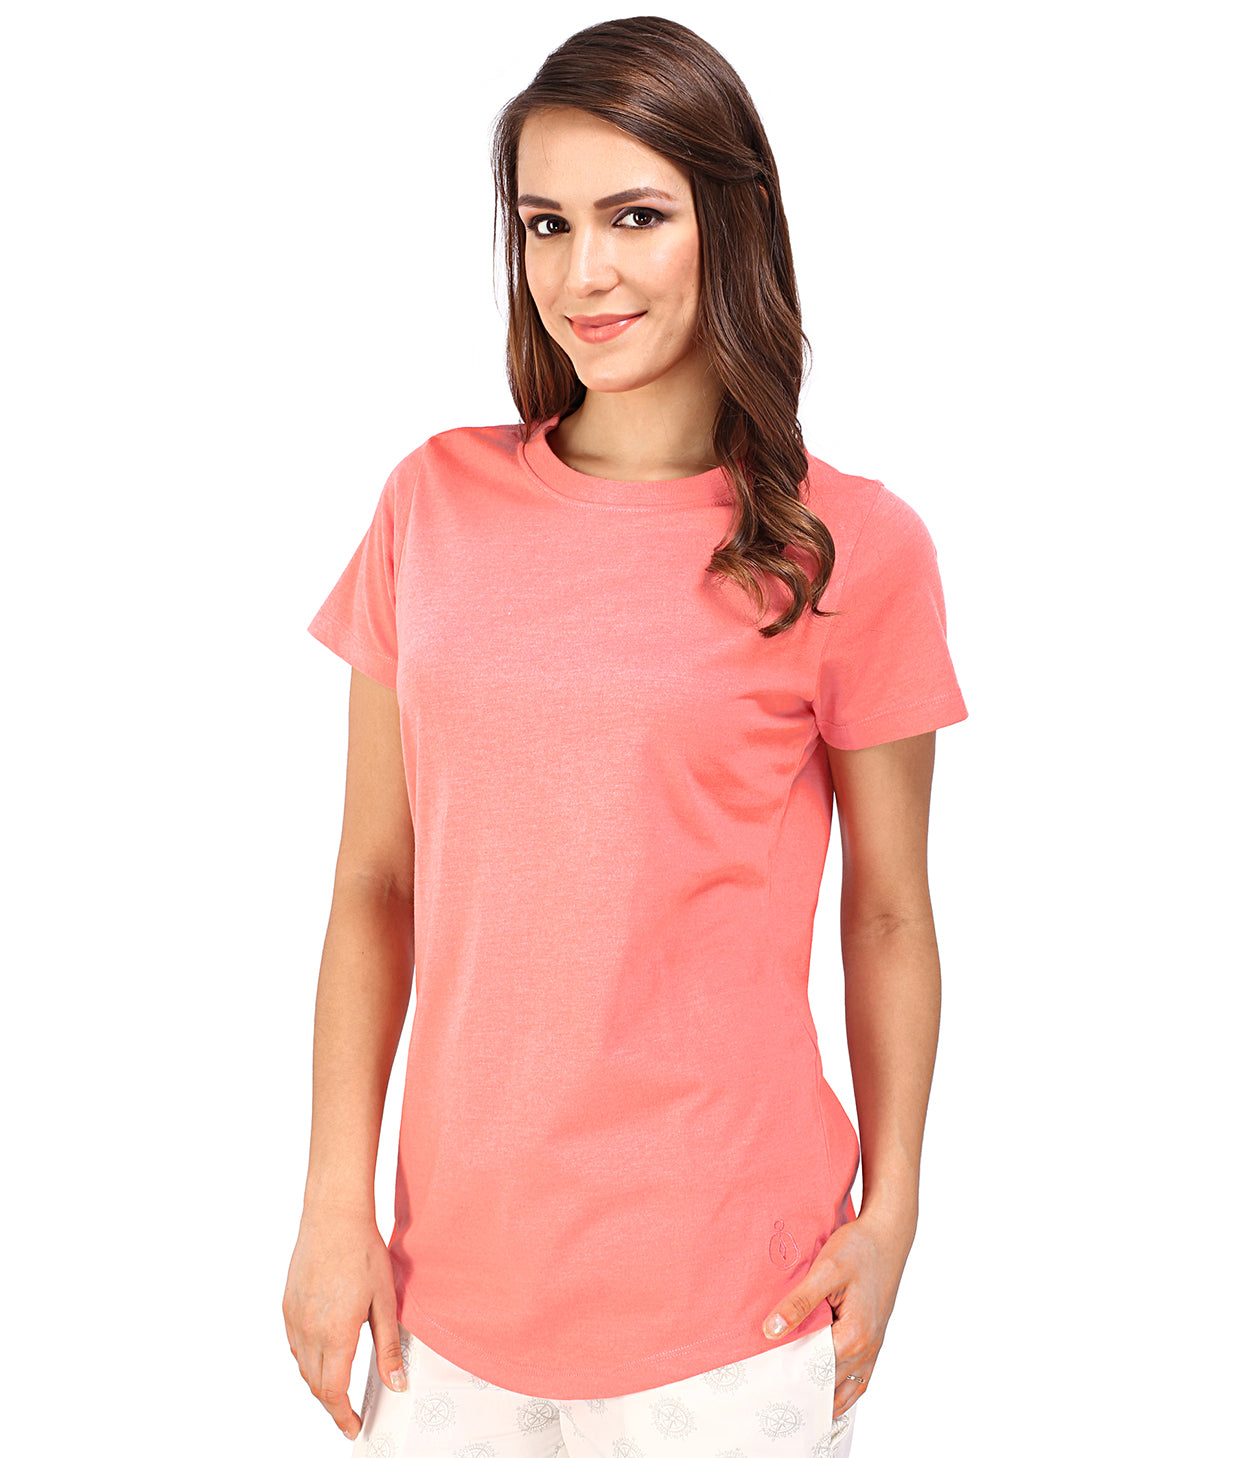 Coral Melange Womens T-Shirt